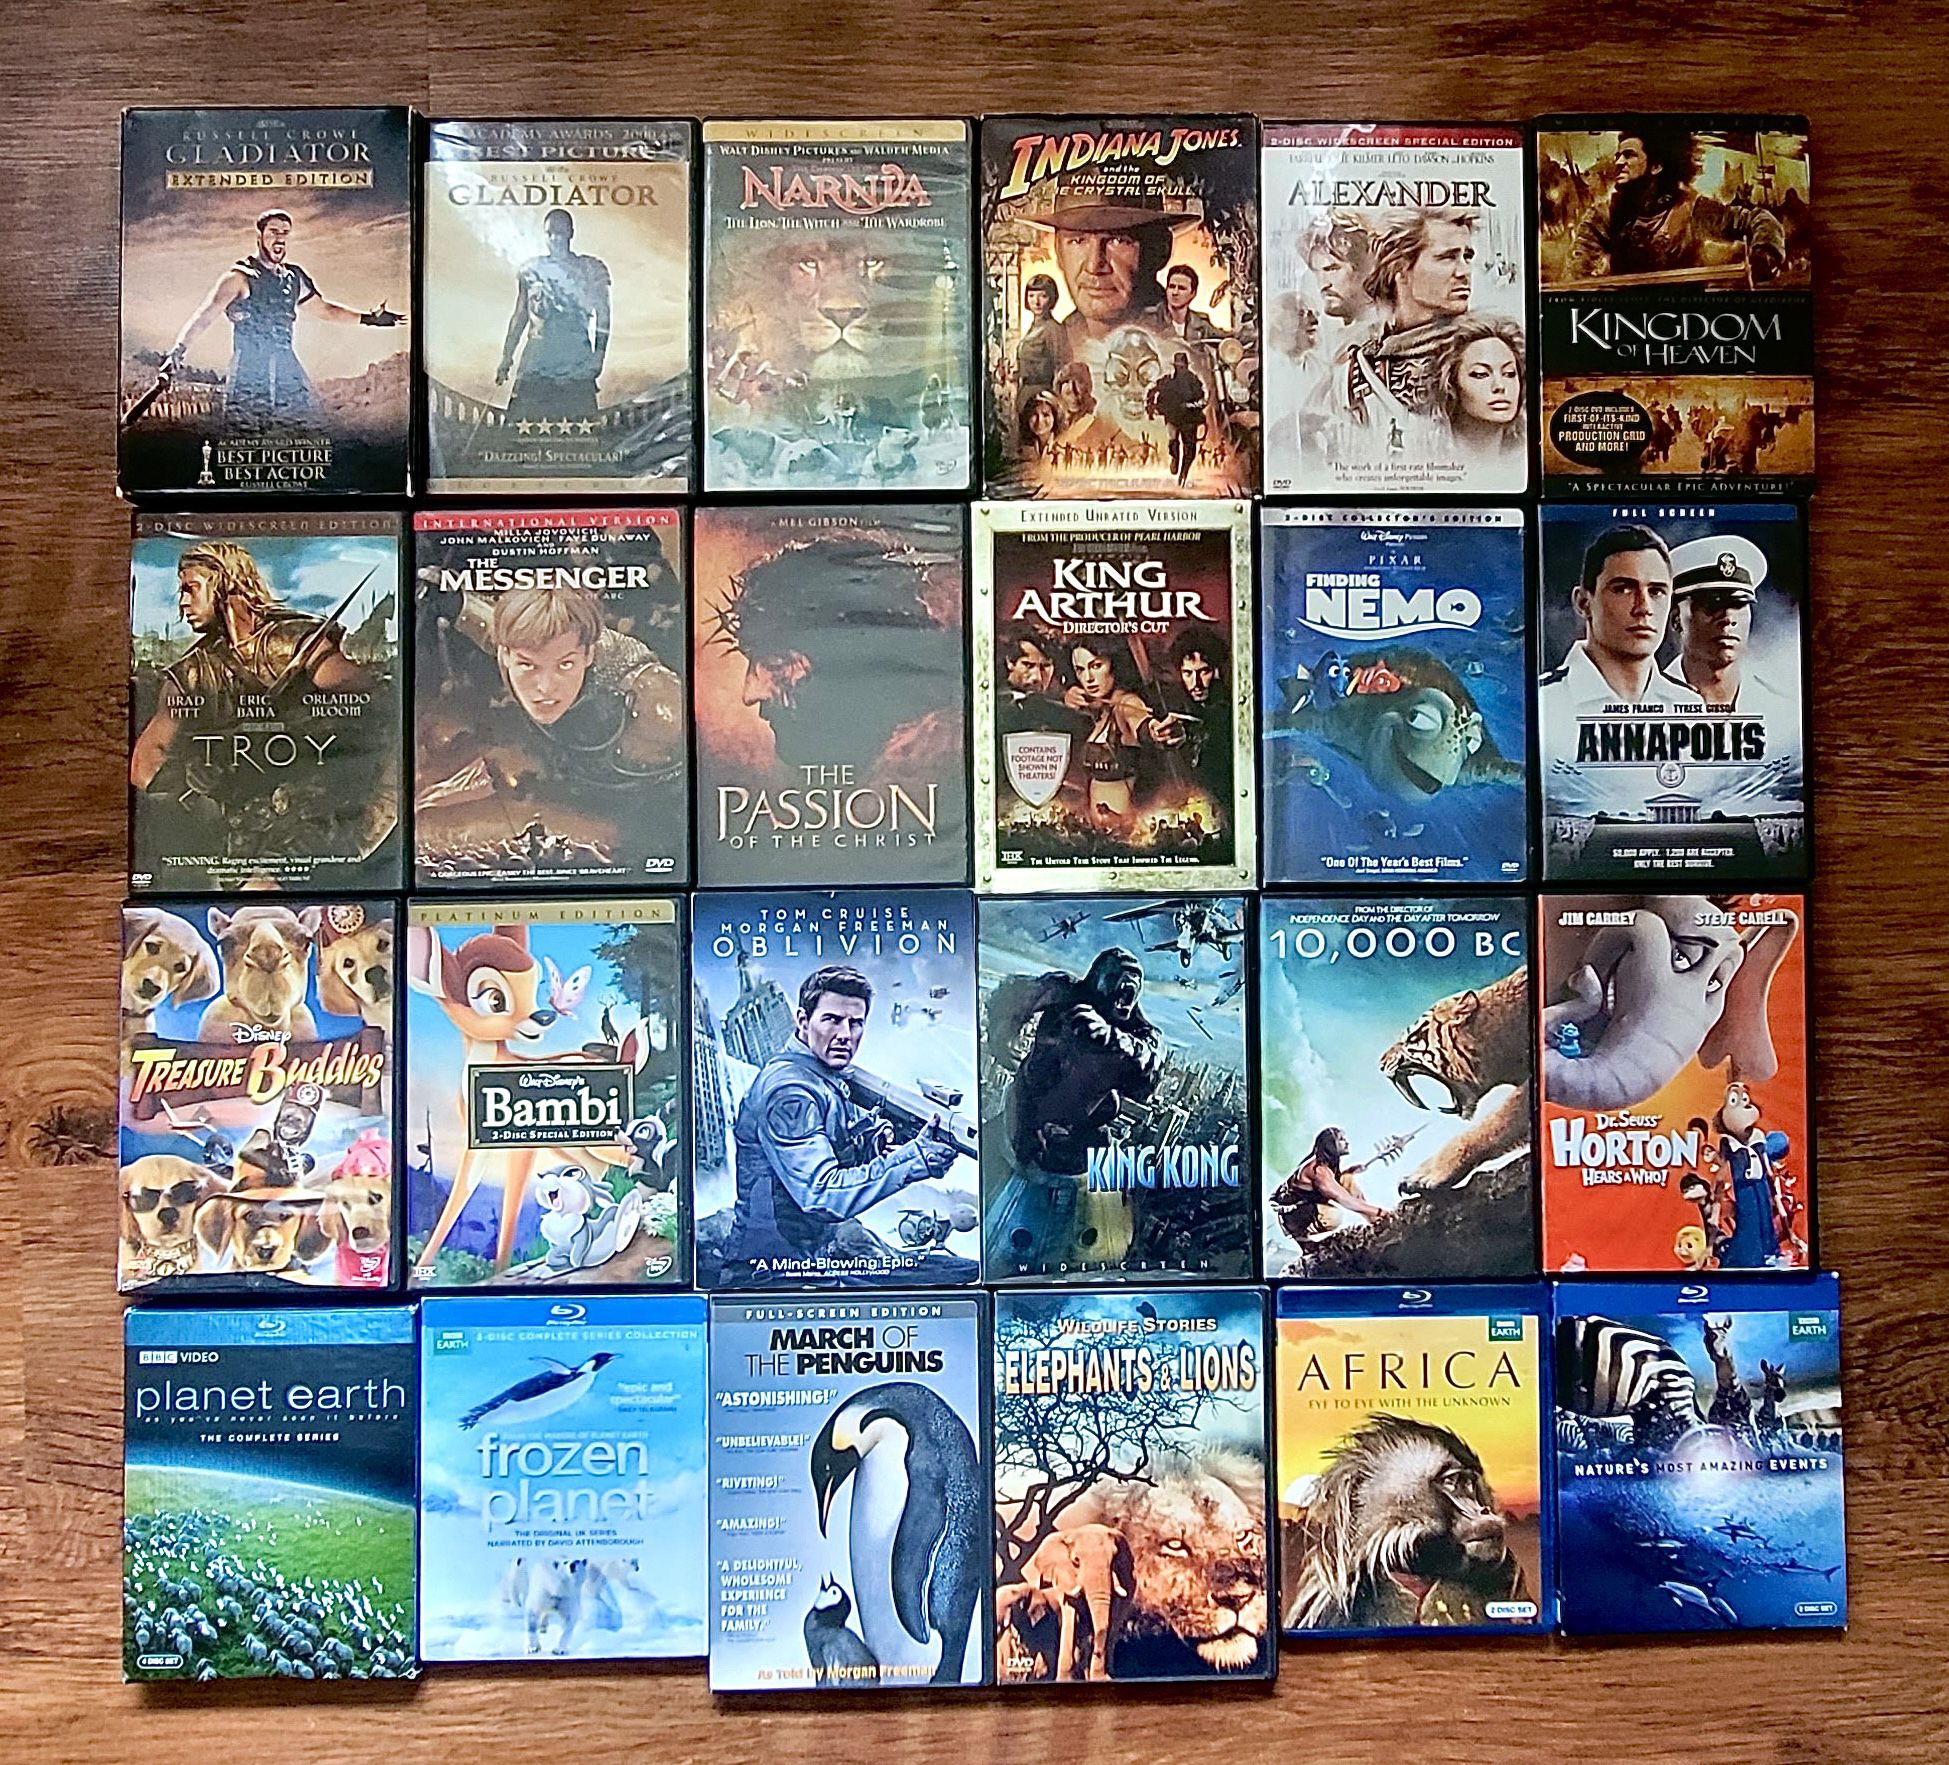 DVD/Blu-Ray Movies